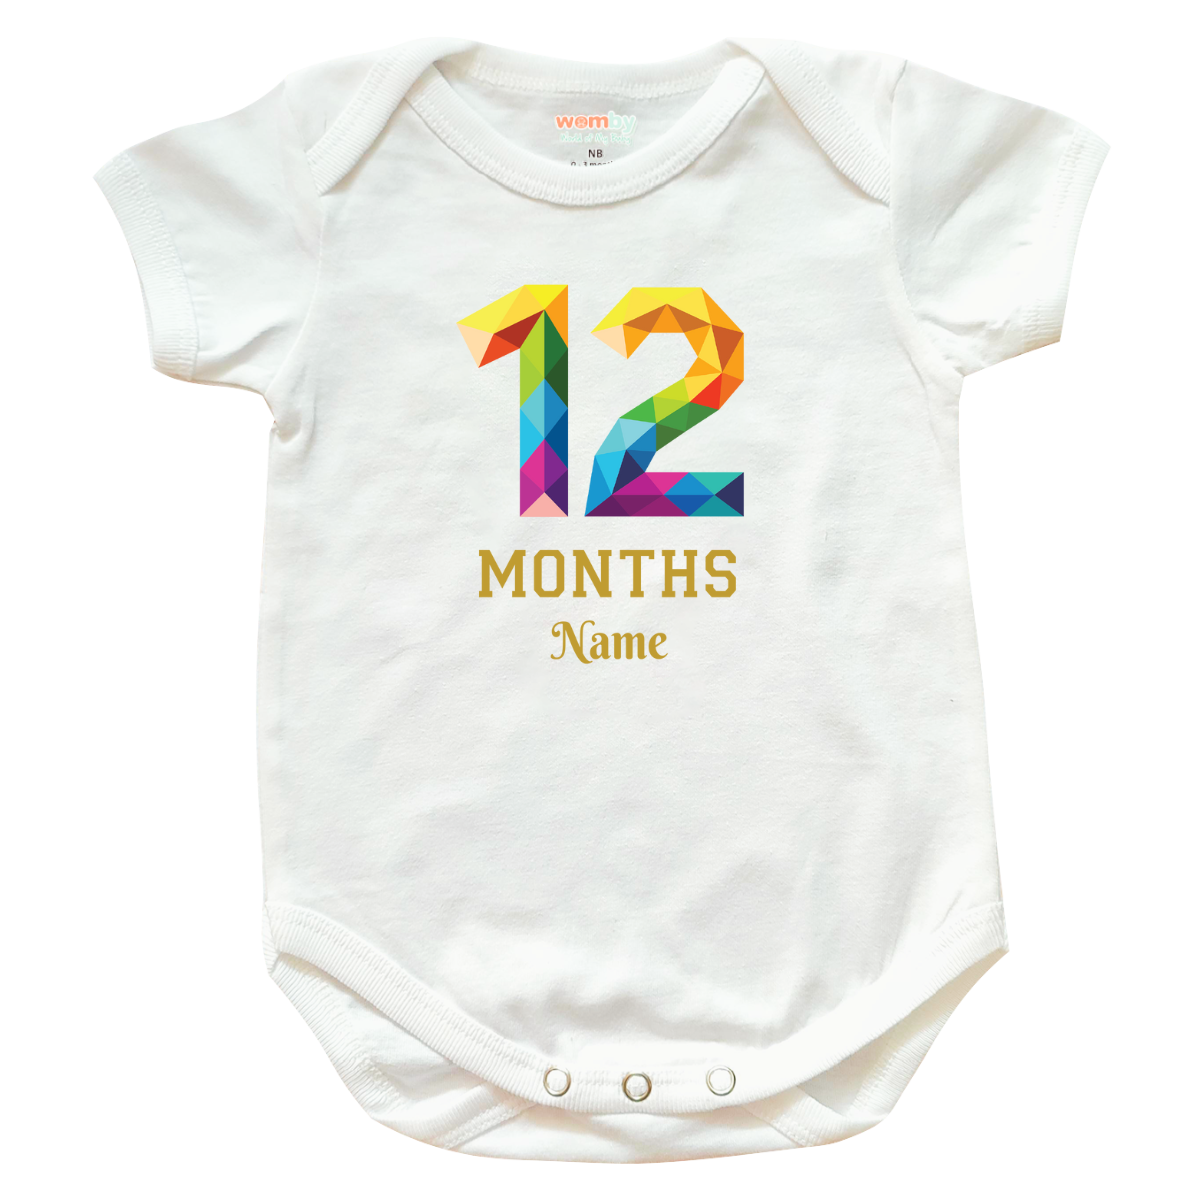 Milestone Emboss Numbers Baby Rompers - White 12